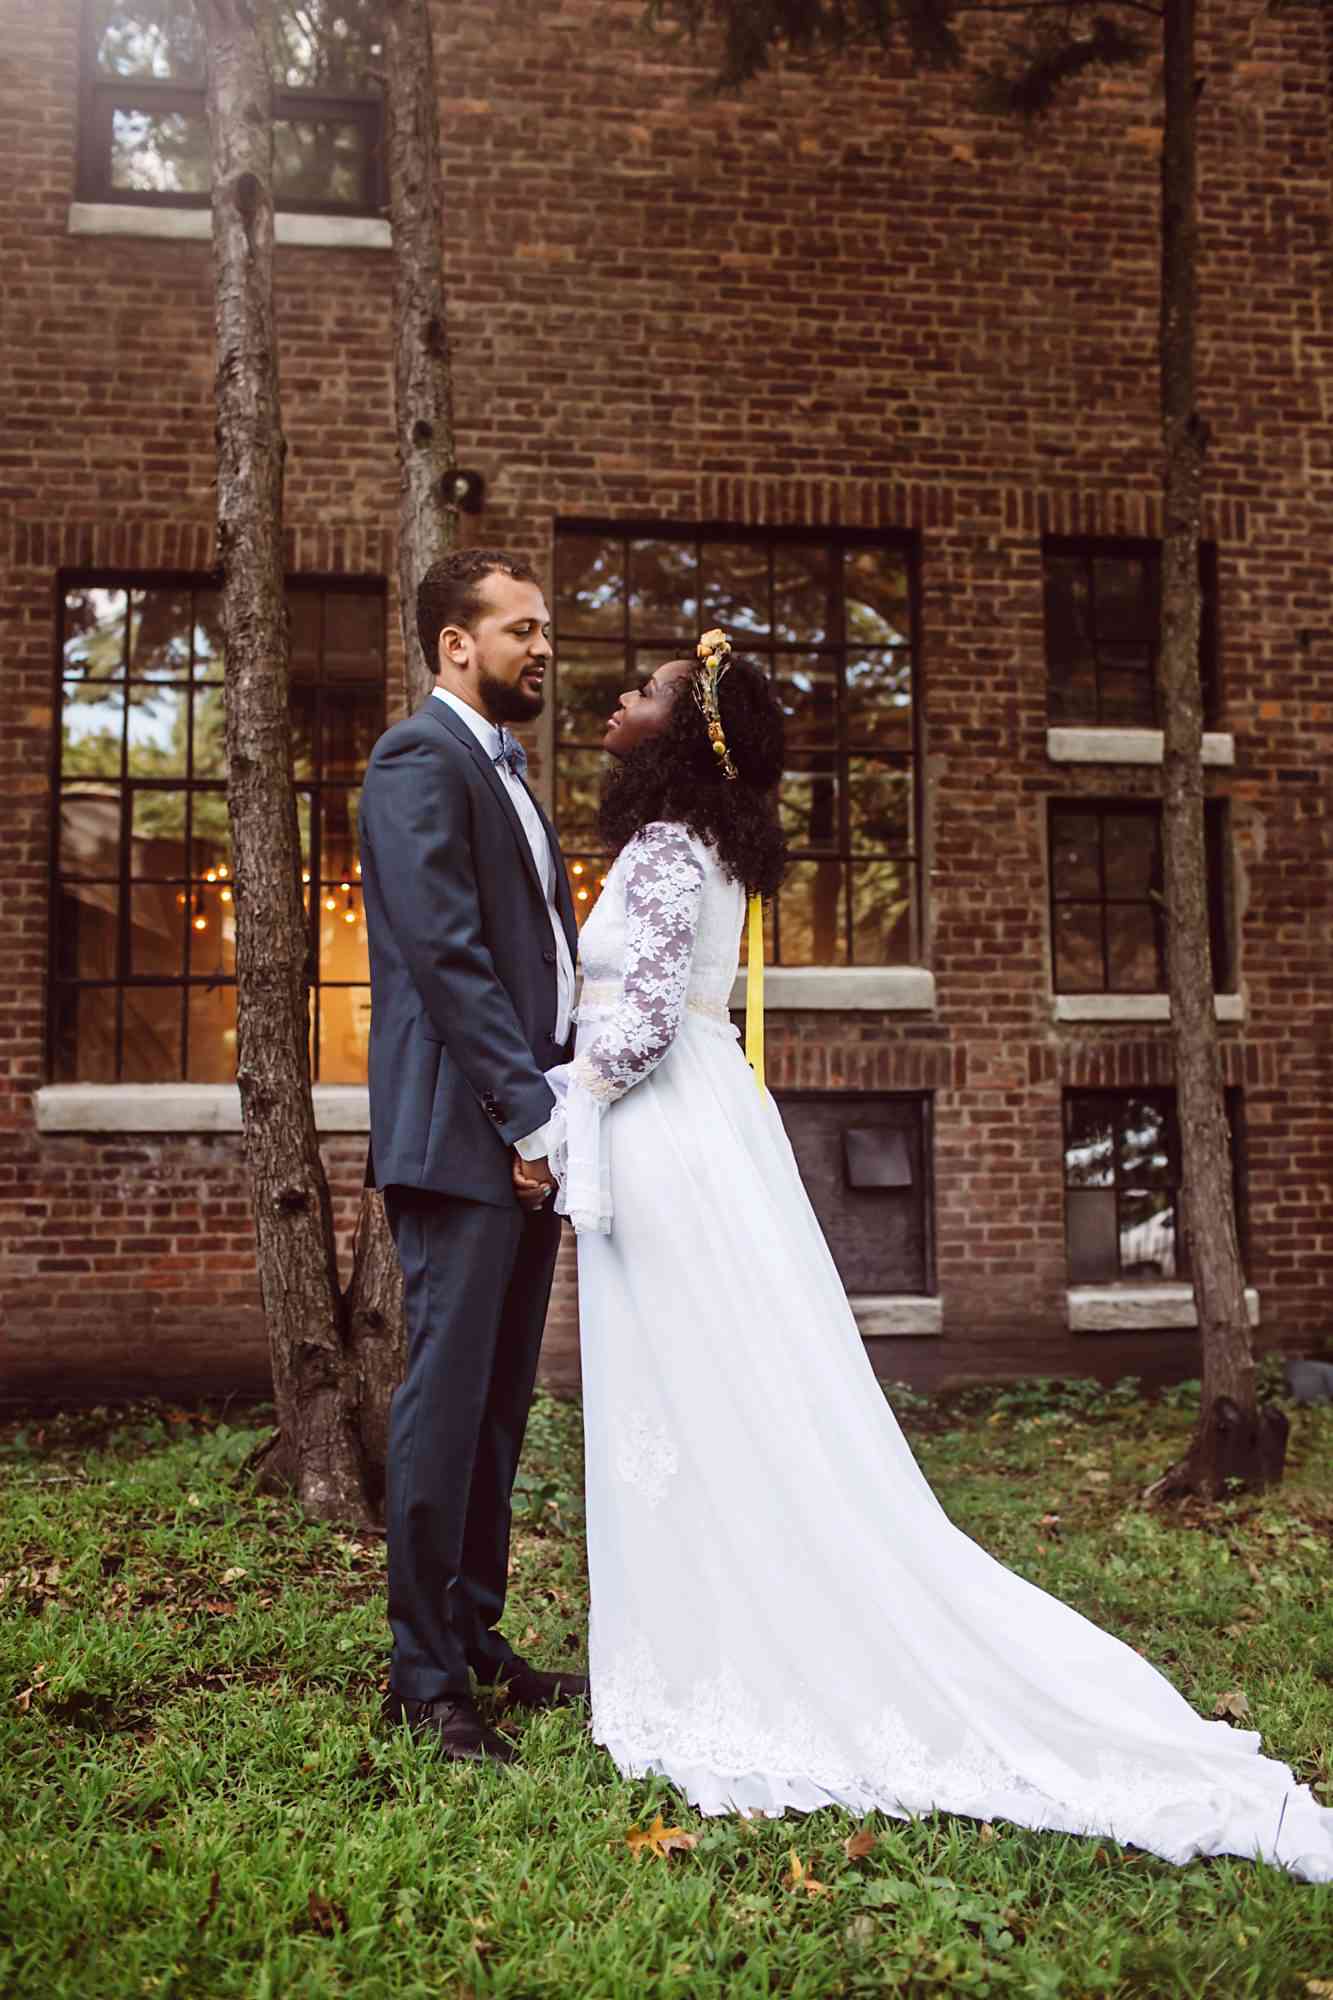 A Custom Suit and an Heirloom Wedding Dress